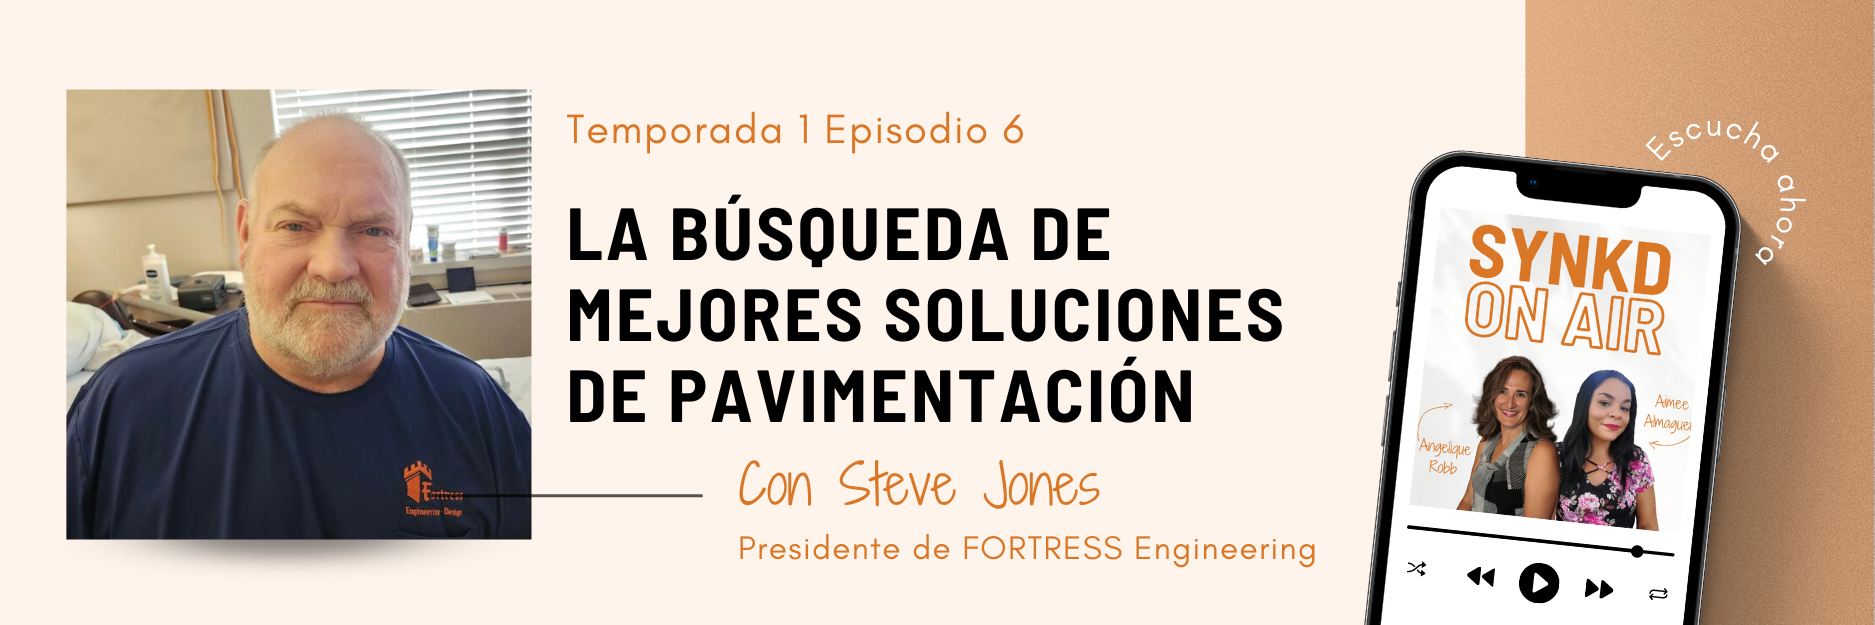 Steve Jones Ep. 6 (espanol)